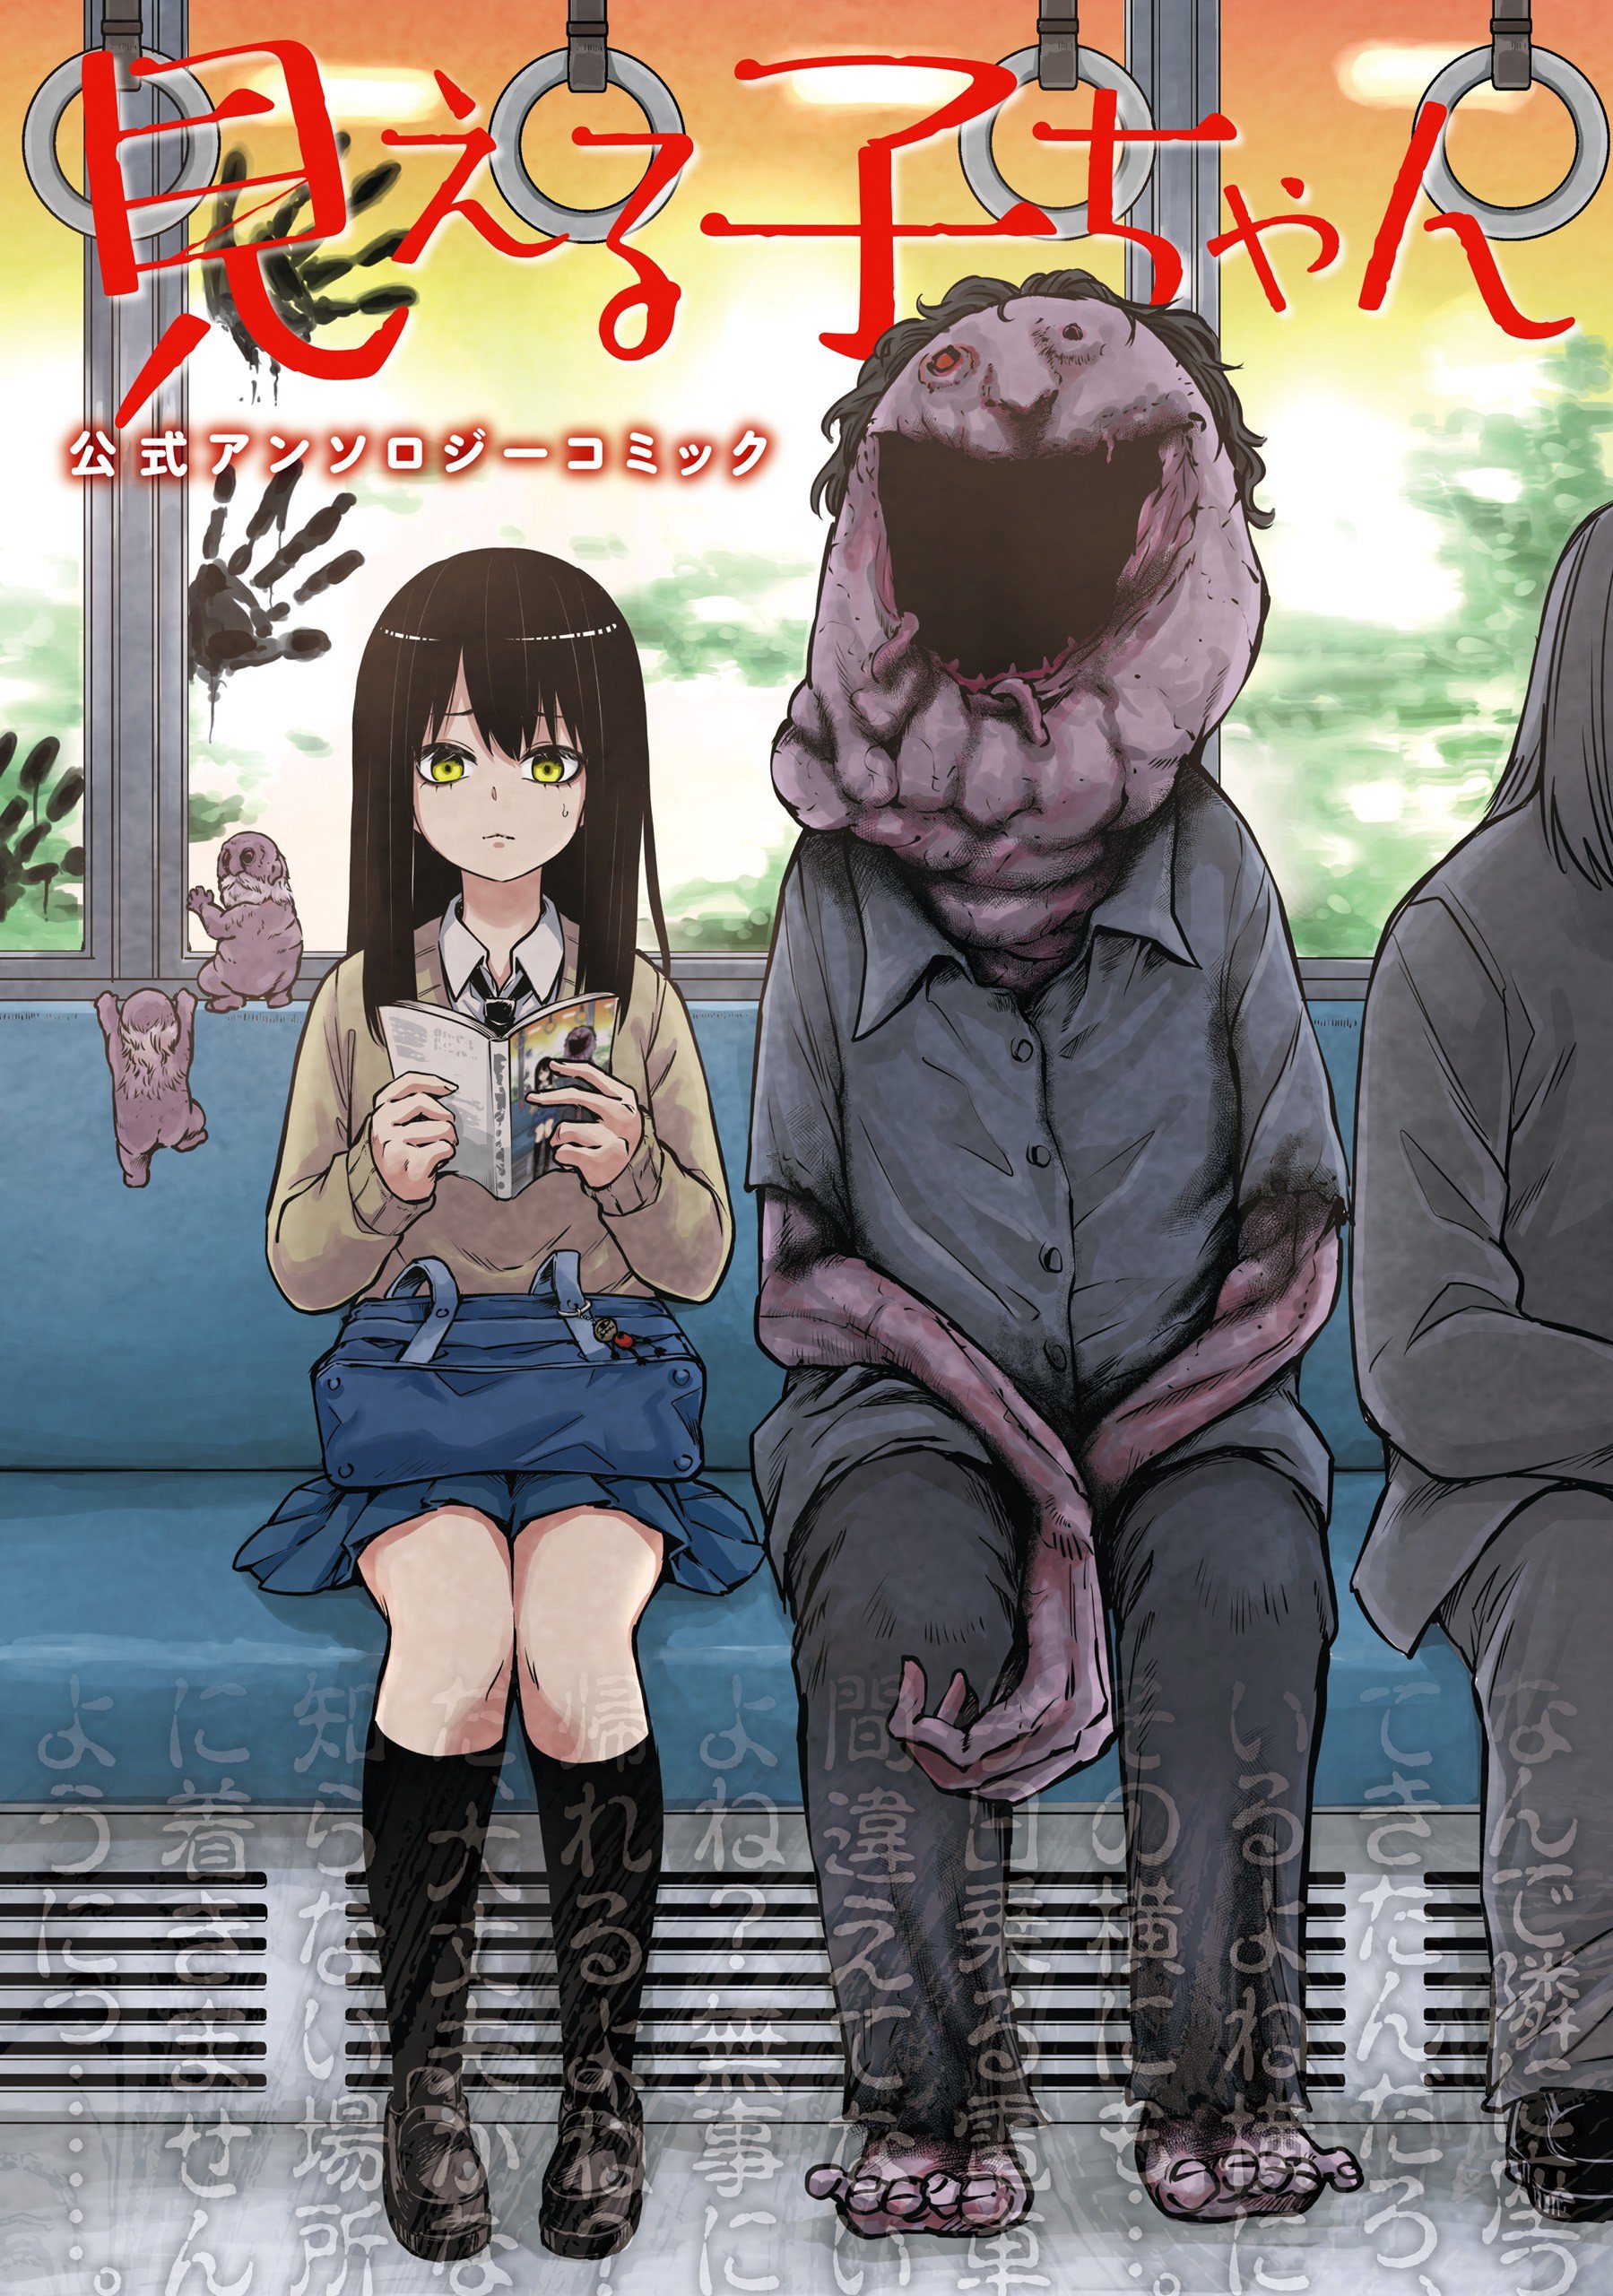 Mieruko-chan Official Comic Anthology